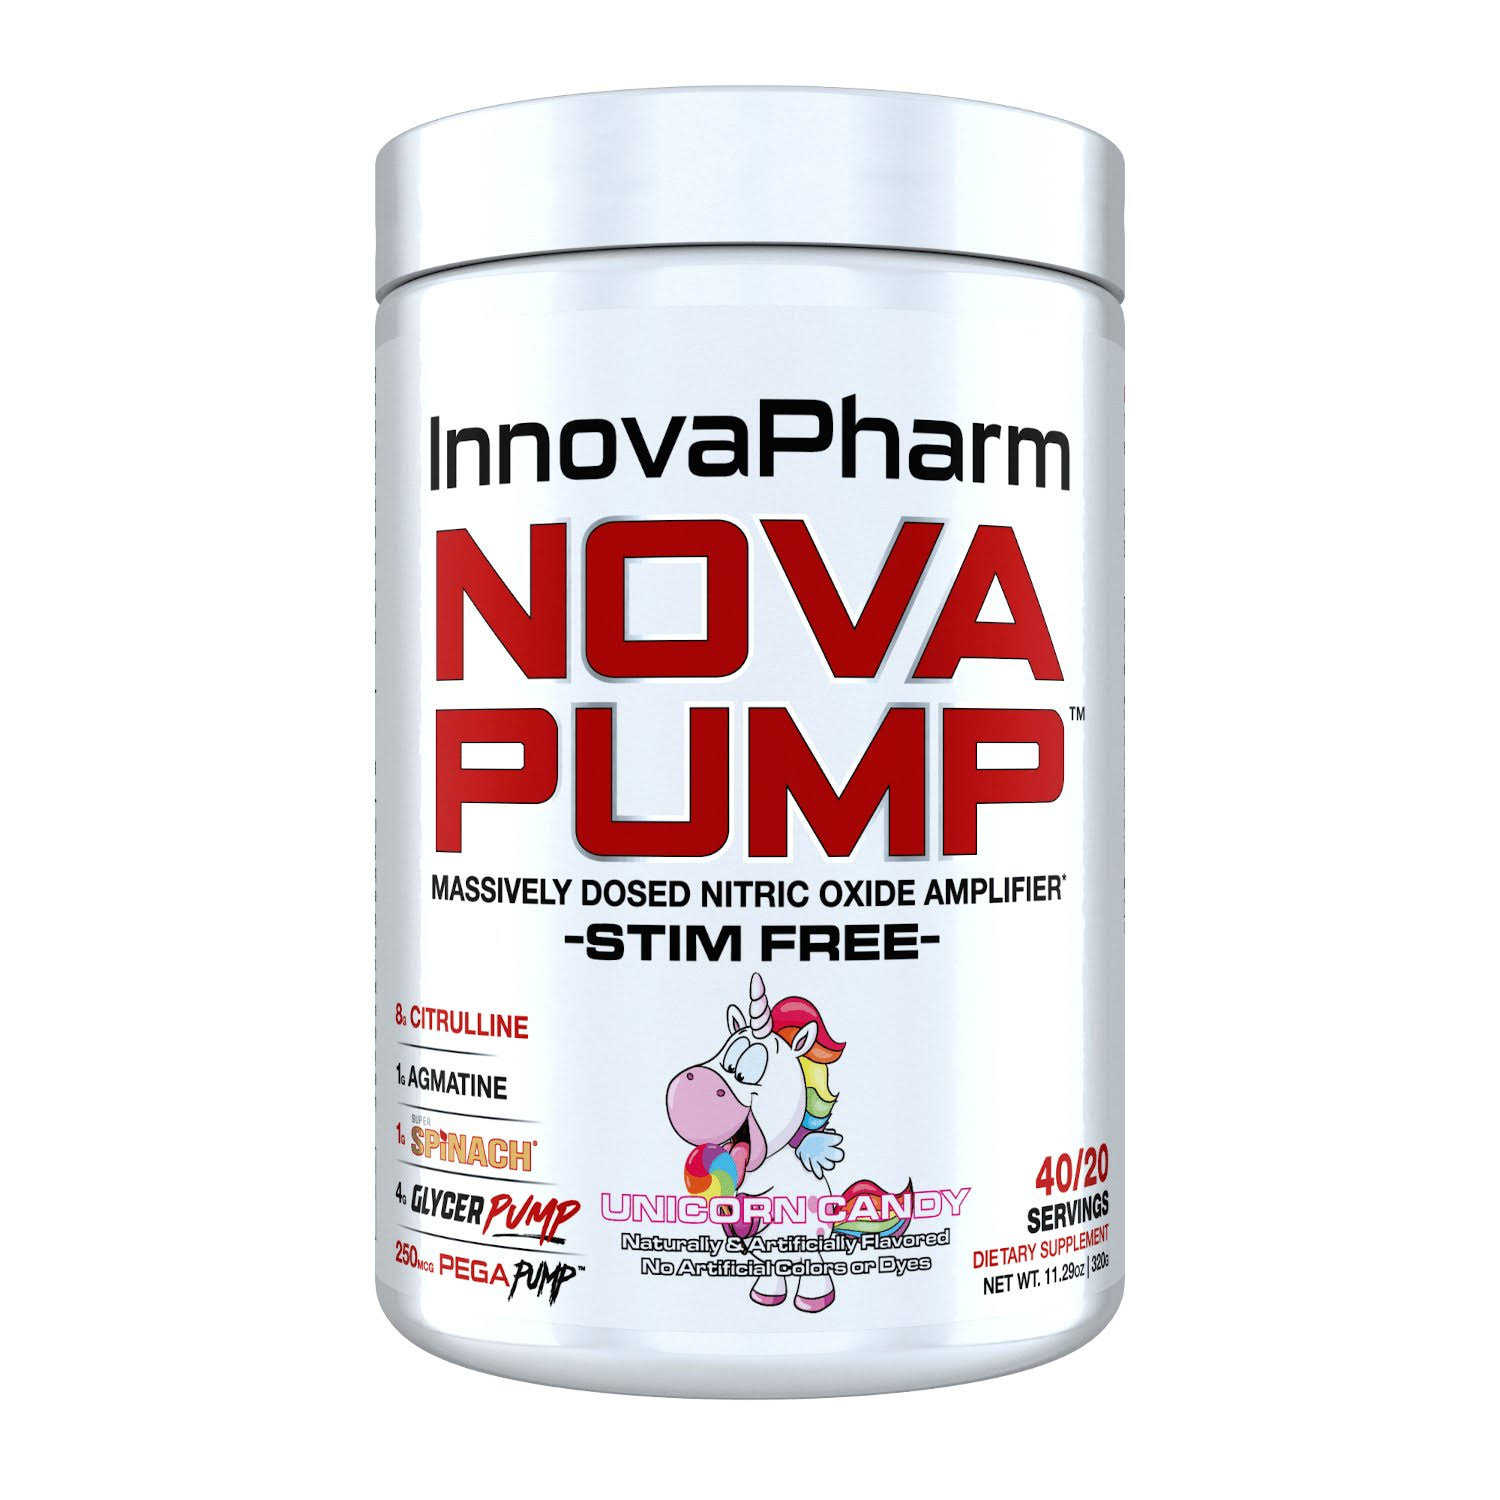 NovaPump Stimulant-Free Pre Workout (Innovapharm) Unicorn Candy